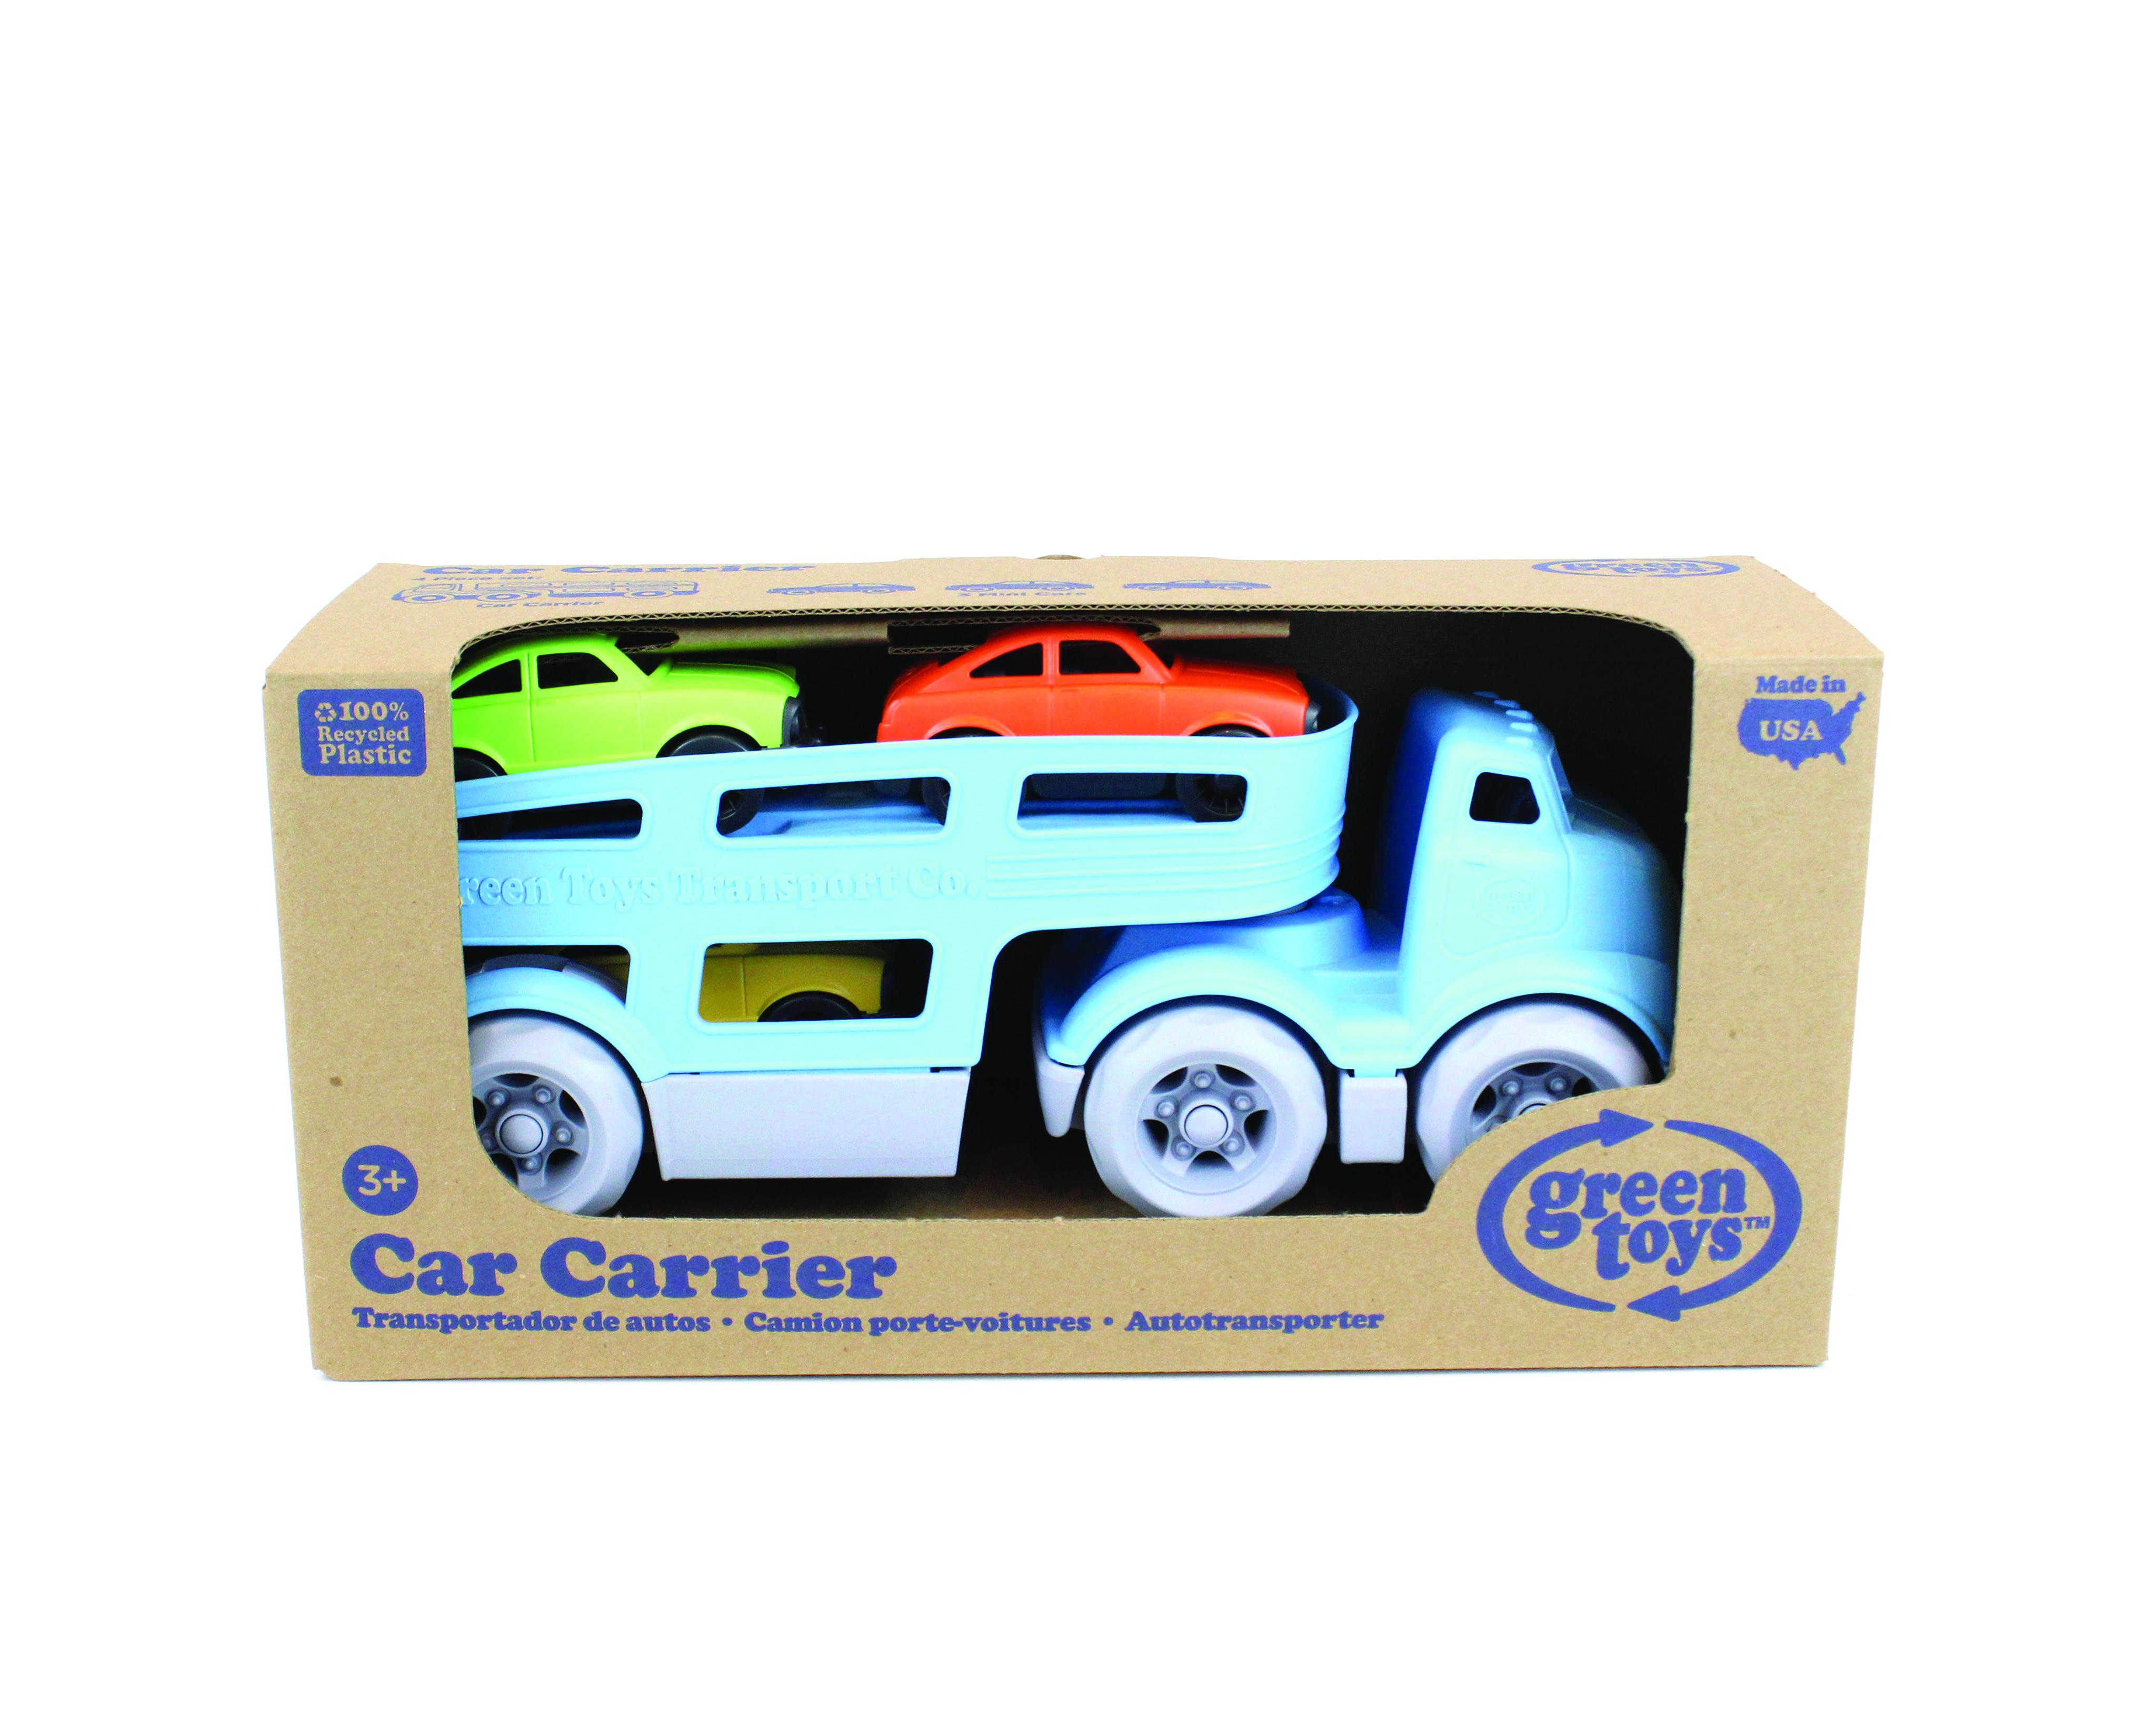 Cardboard packaging holding car transporter toy.